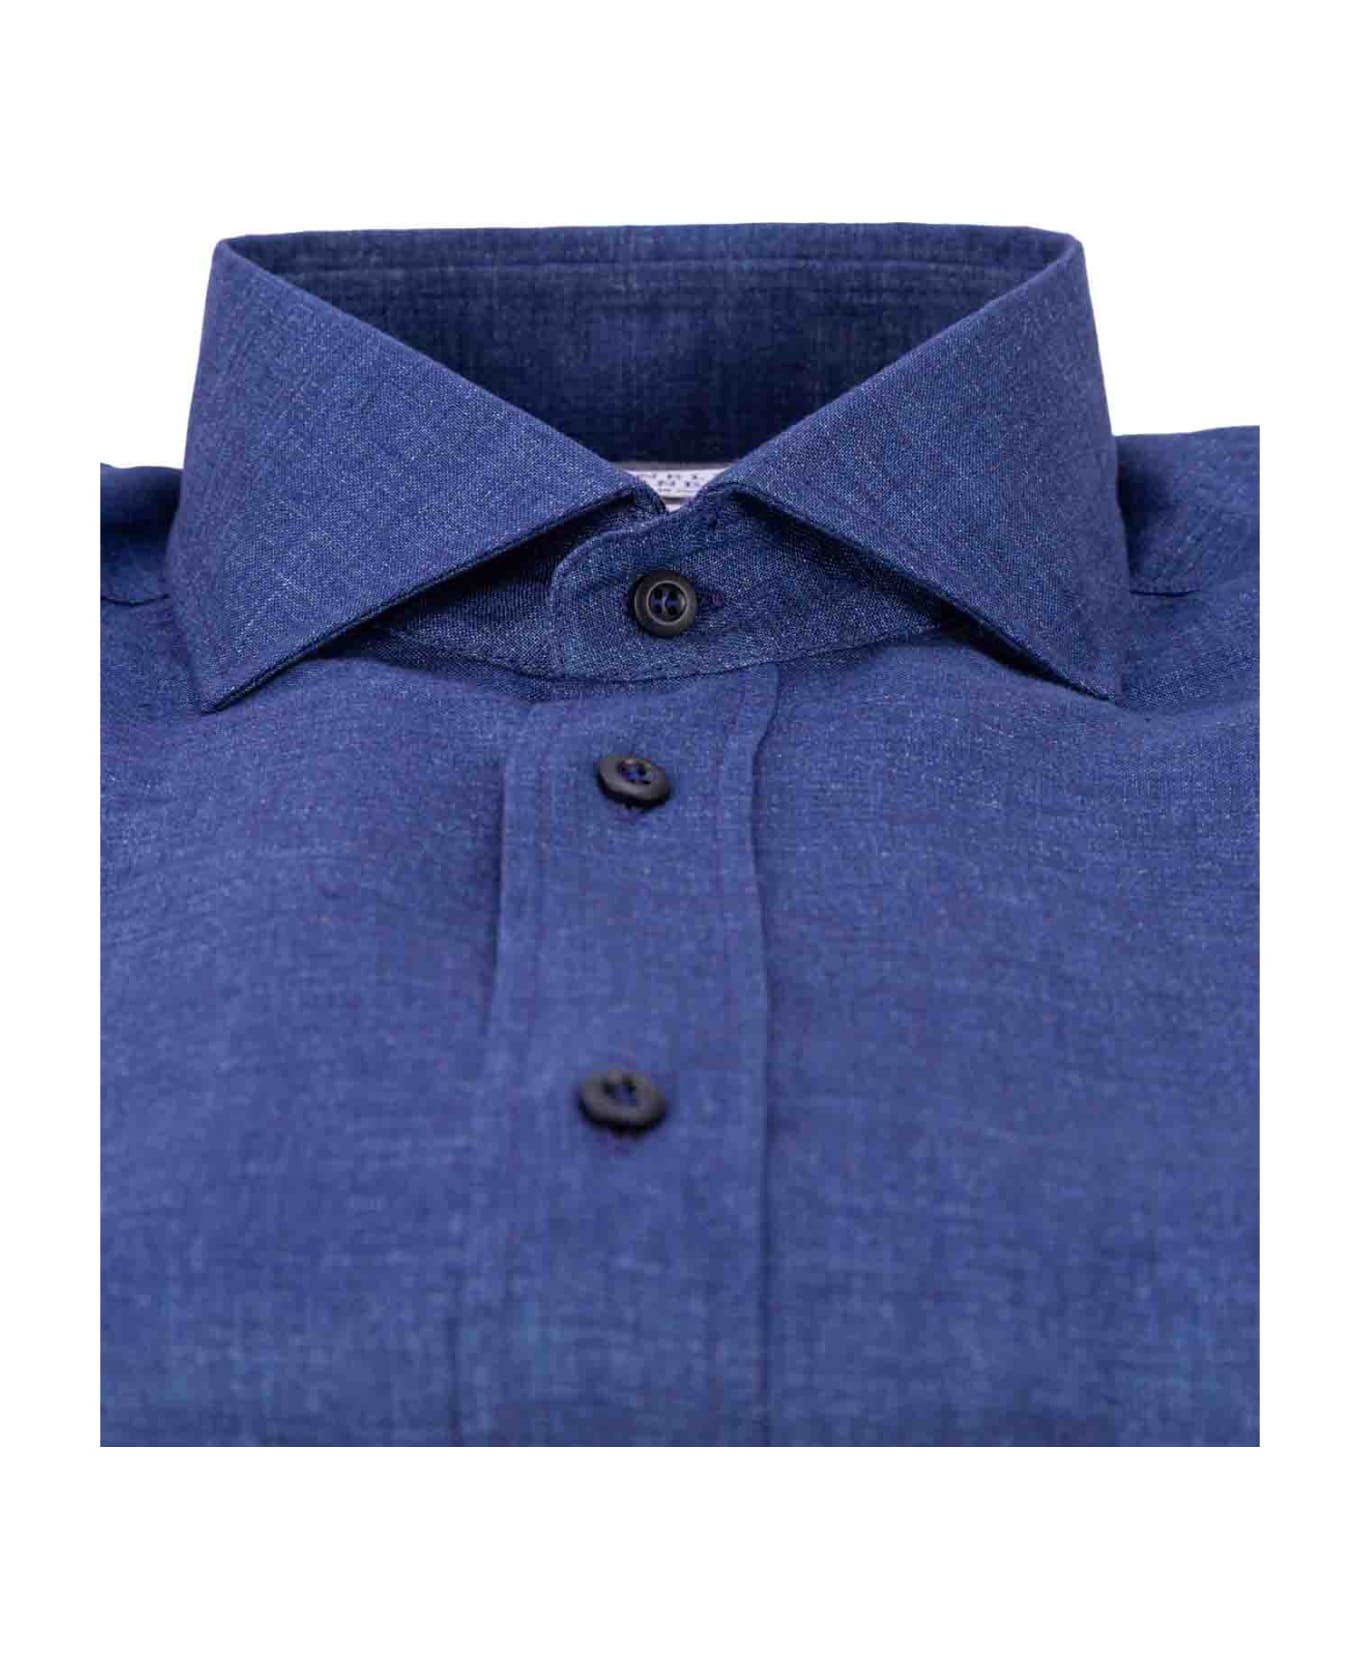 Brunello Cucinelli Shirts Blue - Blue シャツ